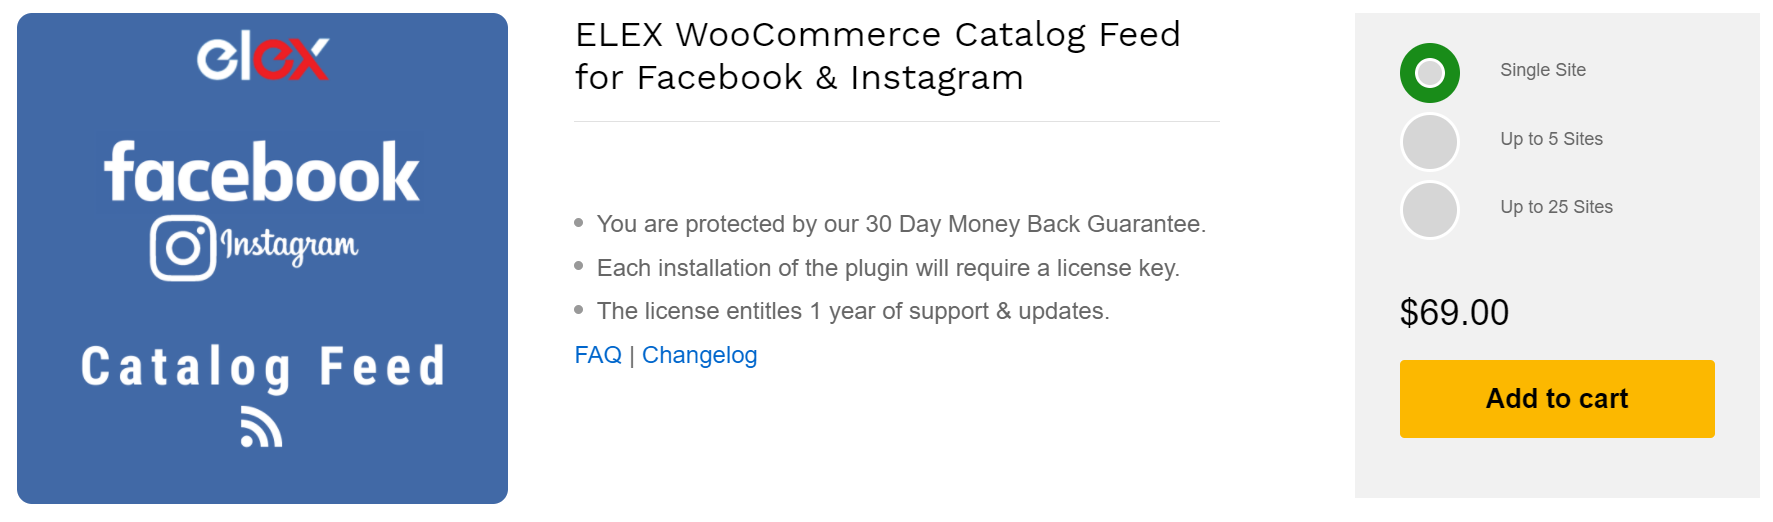 Integrate WooCommerce Catalog Feed for Instagram | ELEX Woocommerce catalog feed for Facebook and Instagram